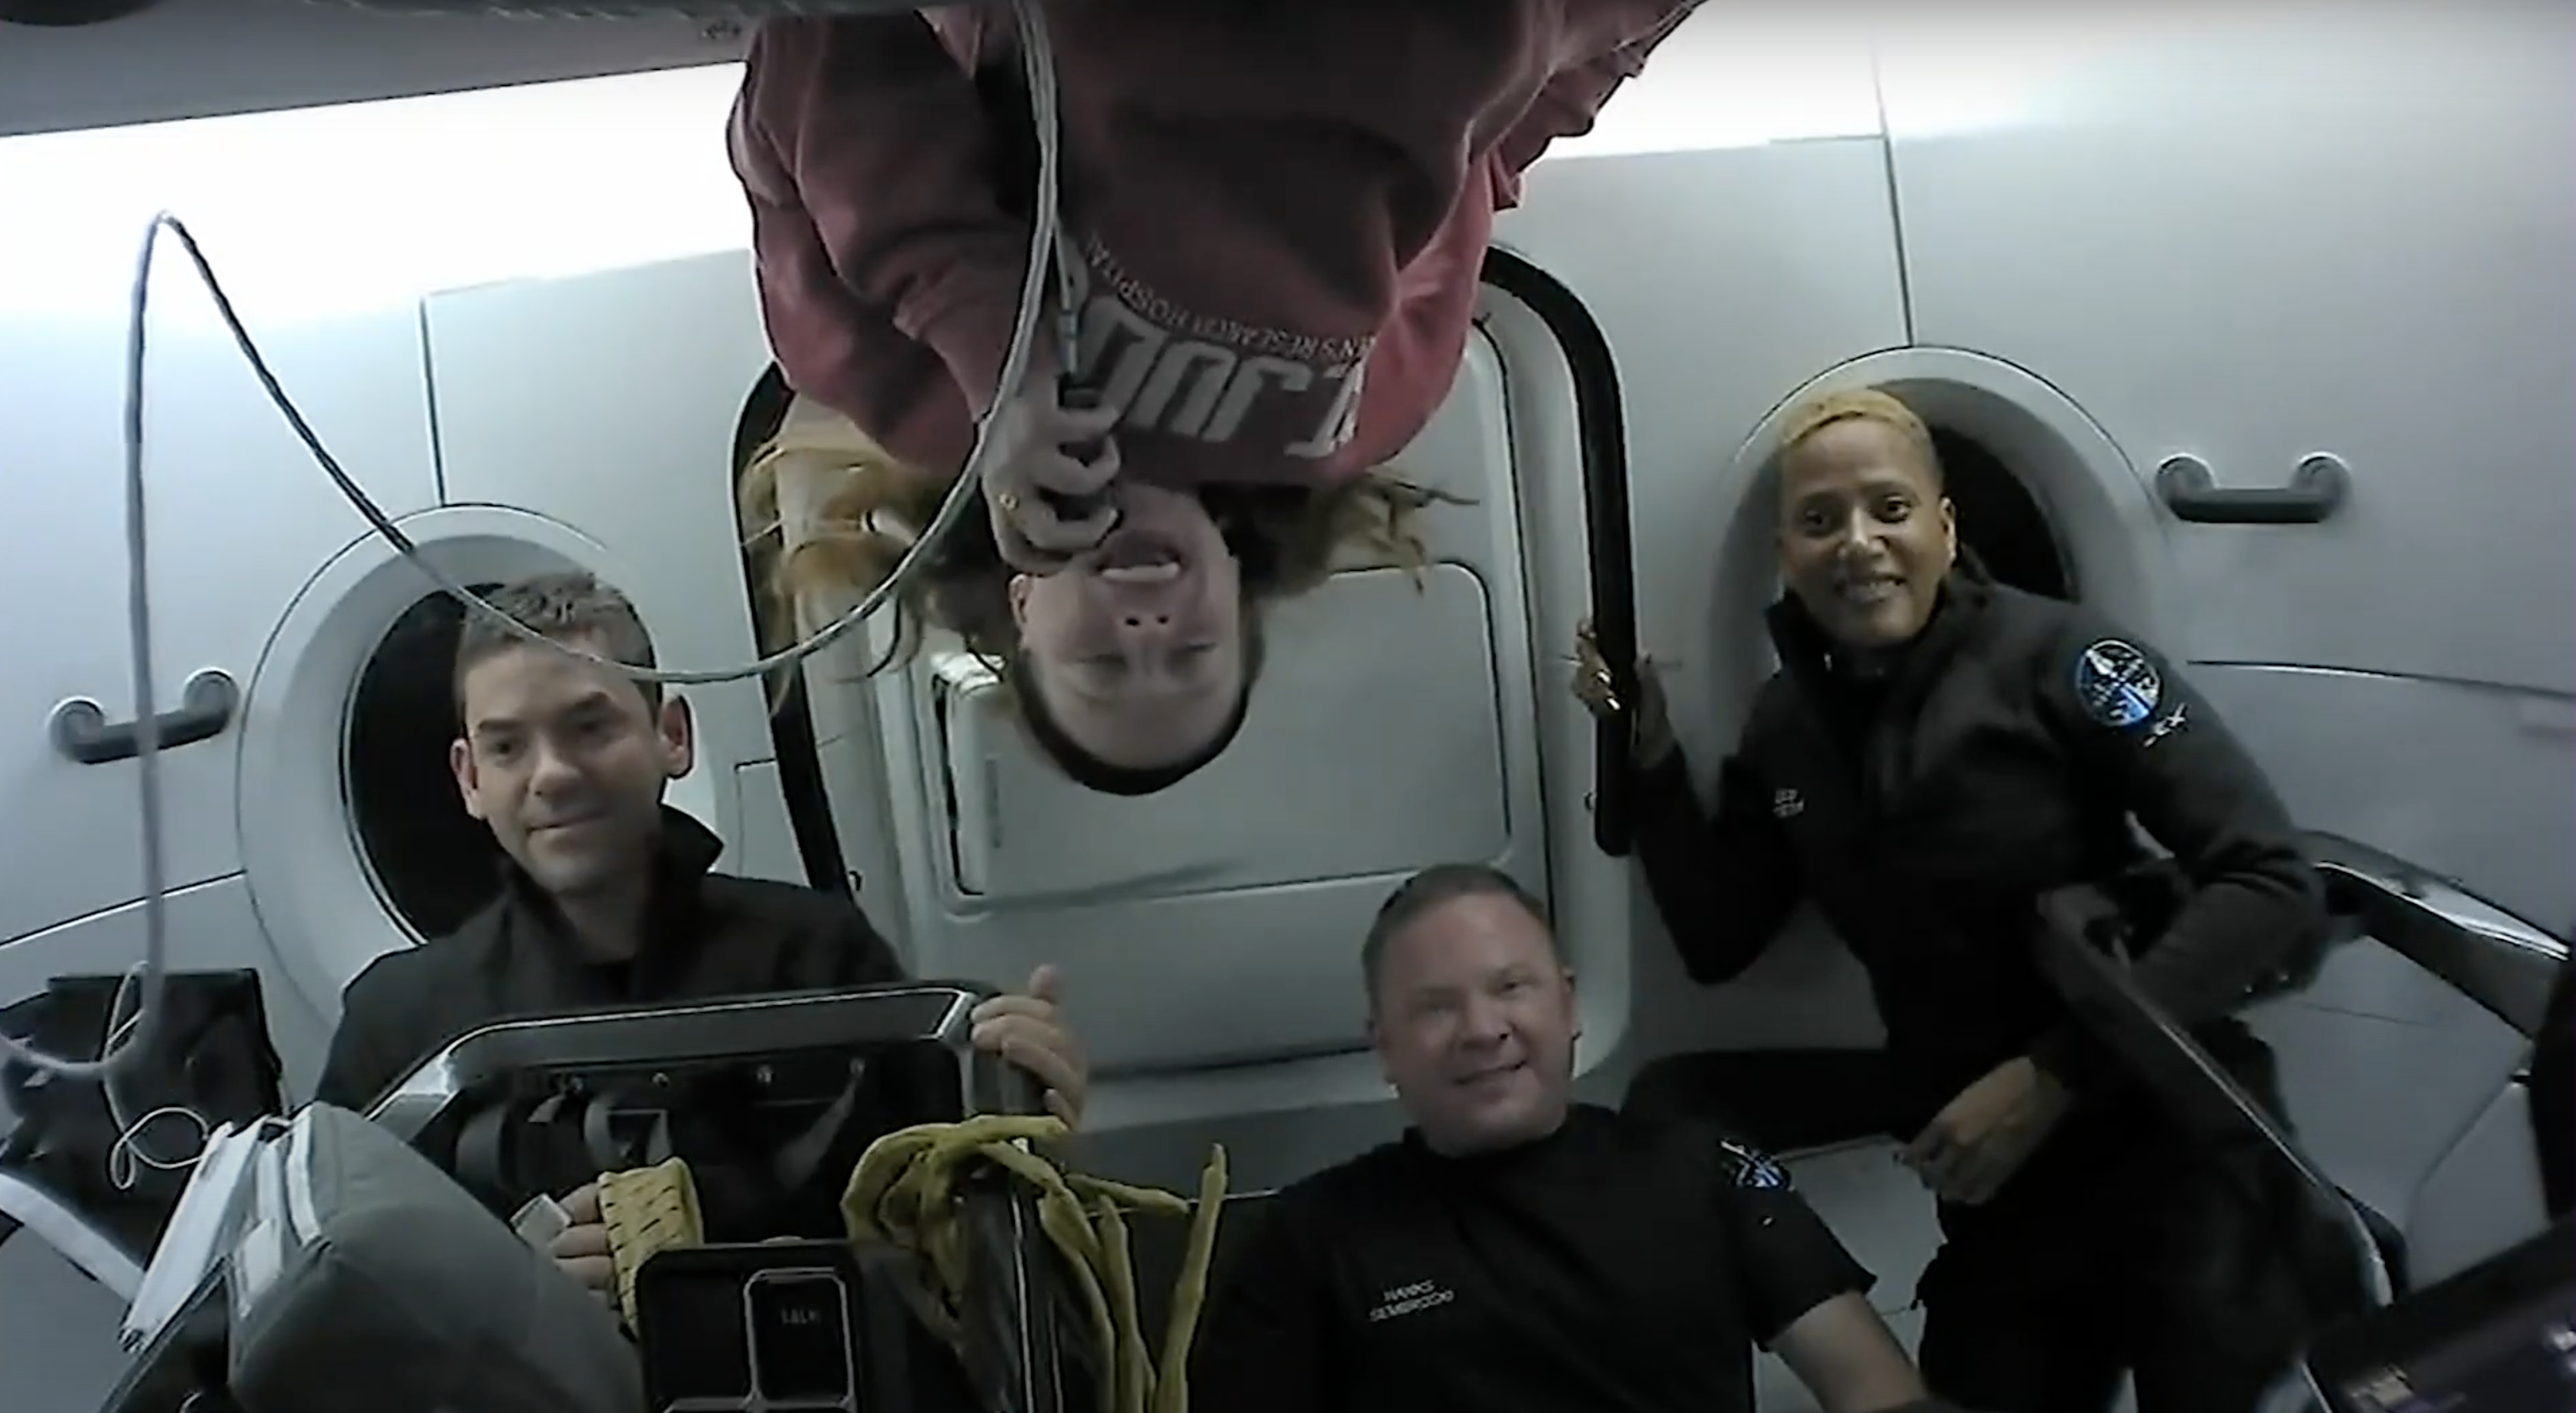 Inspiration4 Crew in orbit speaking with St. Jude patients.